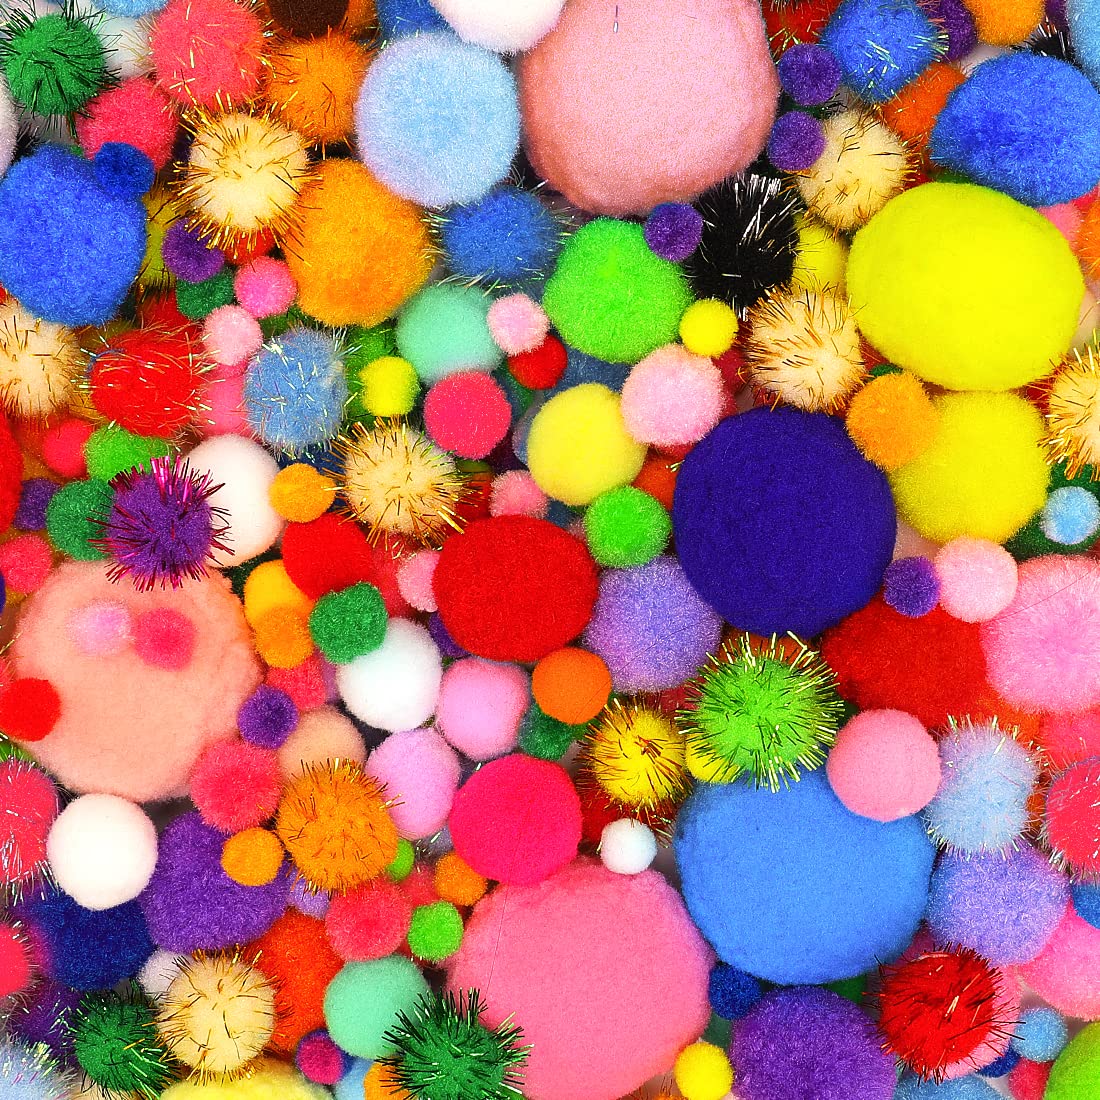 Iooleem Multi-Colored Regular & Sparkly Glitter Pom Poms 800pcs Assorted  Sizes Pom Poms for Crafts